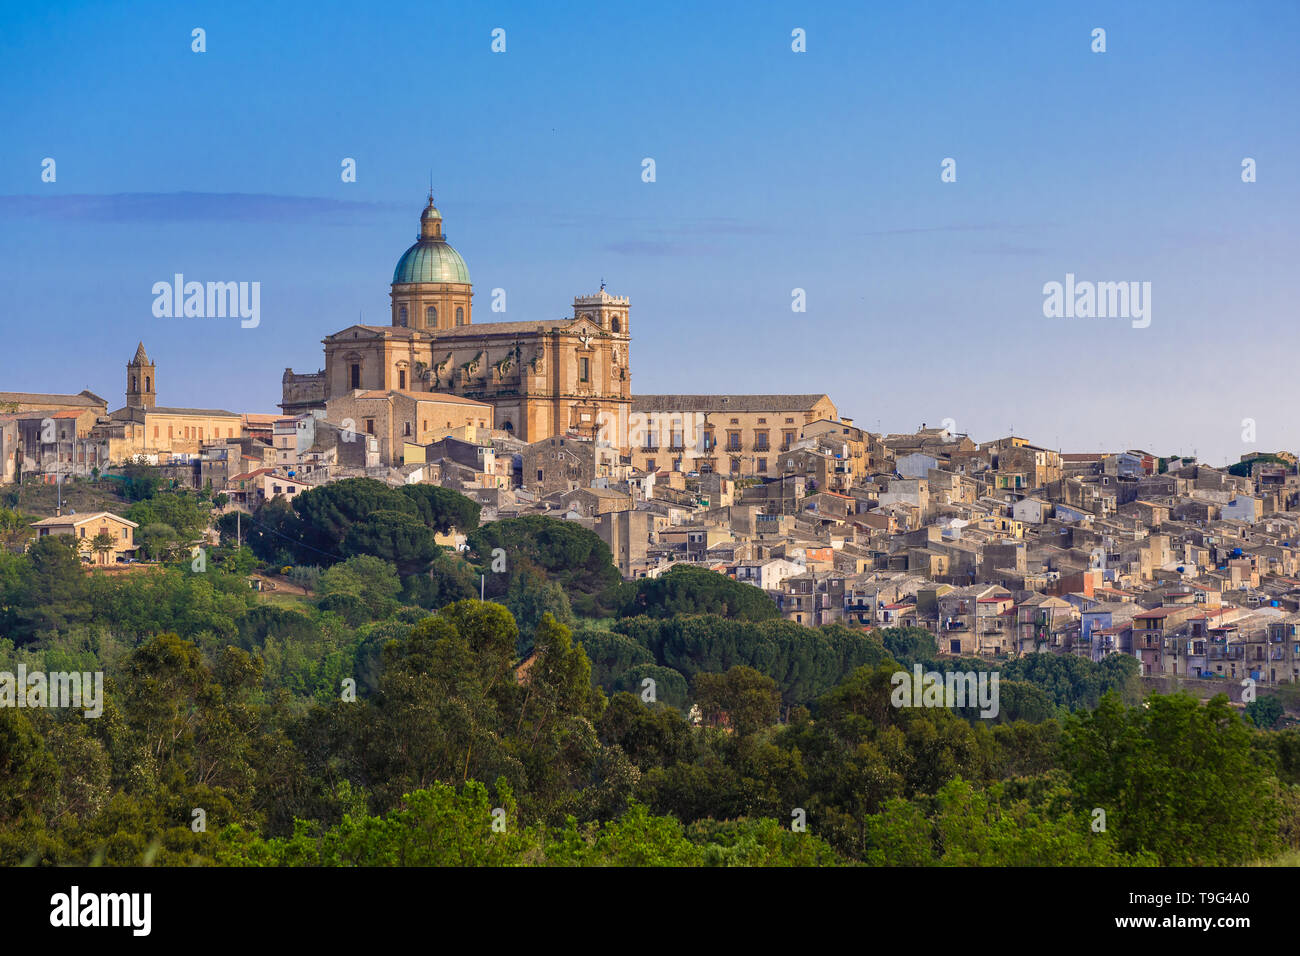 View of Piazza Armerina, Sicily, Italy Stock Photo